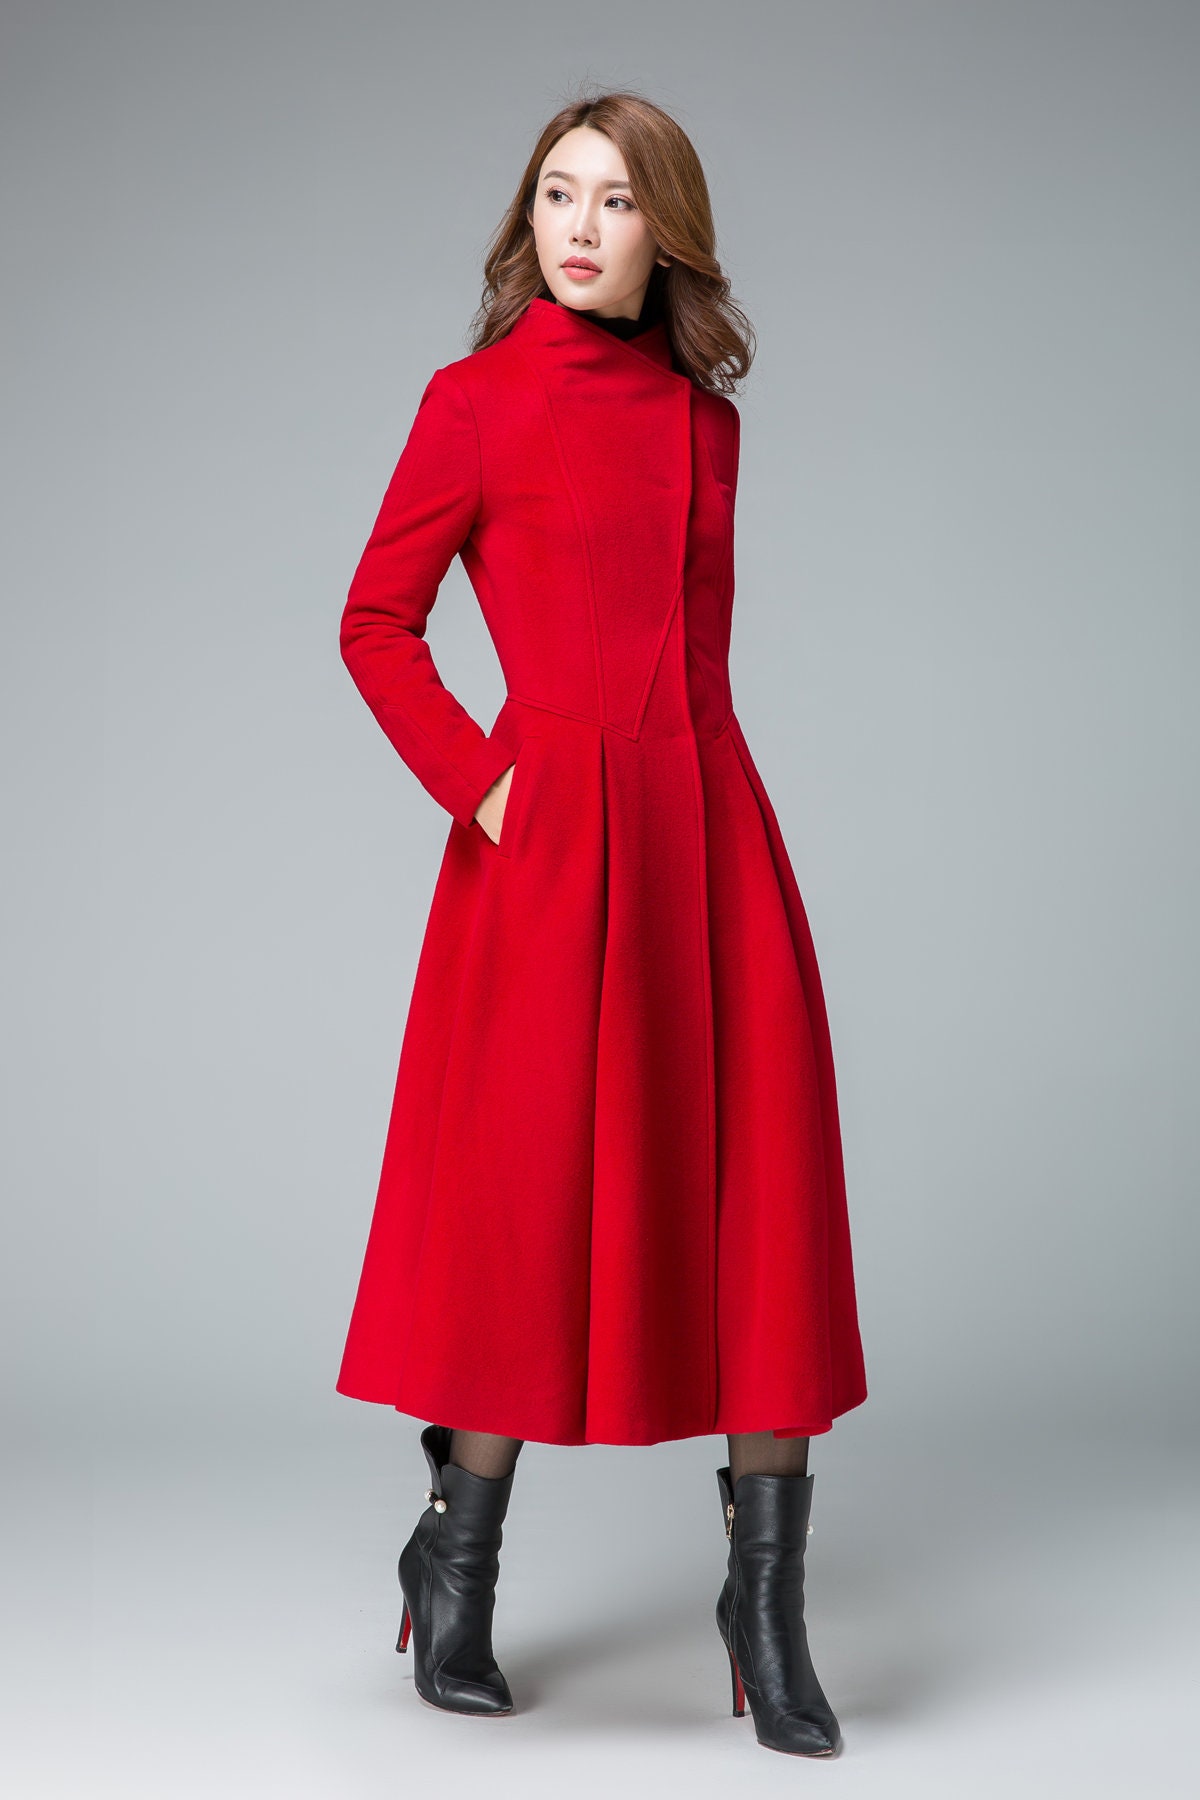 JMETRIE Womens Casual Warm Winter Solid Turtleneck Big Pockets Cloak Vintage Oversize Coats Red